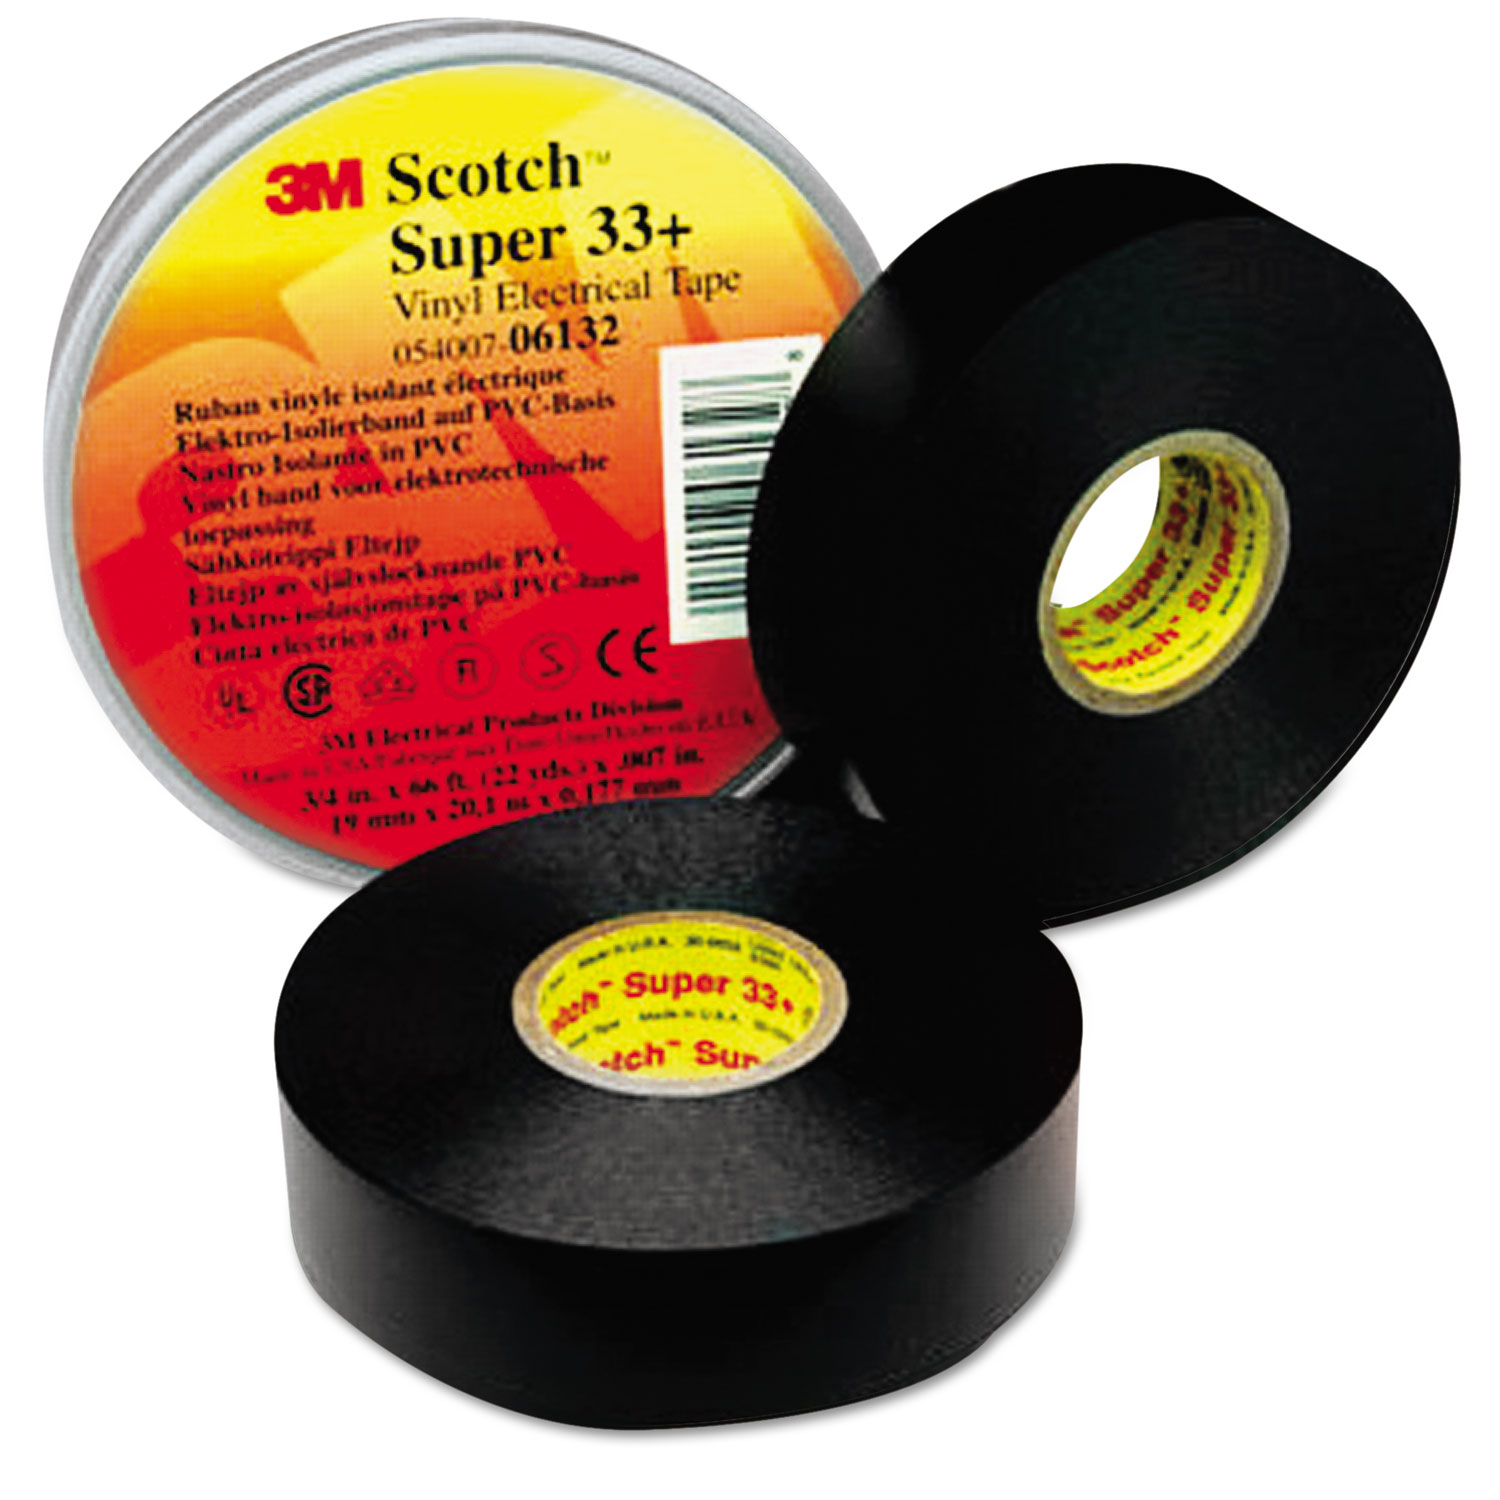  3M 80610138895 Scotch 33+ Super Vinyl Electrical Tape, 0.75 x 52 ft, Black (MMM06133) 